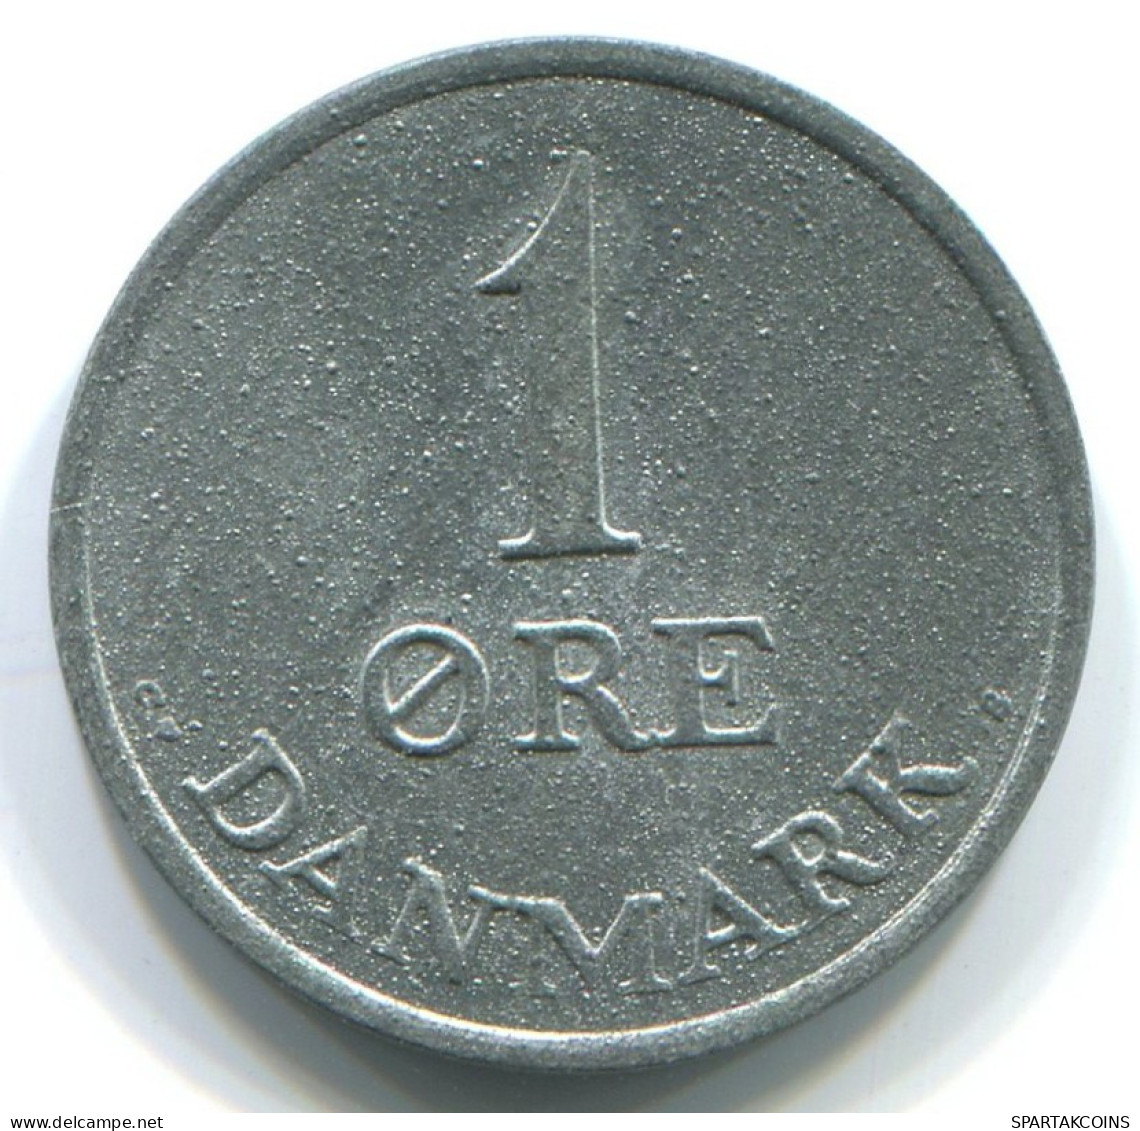 1 ORE 1969 DINAMARCA DENMARK Moneda #WW1032.E.A - Dinamarca